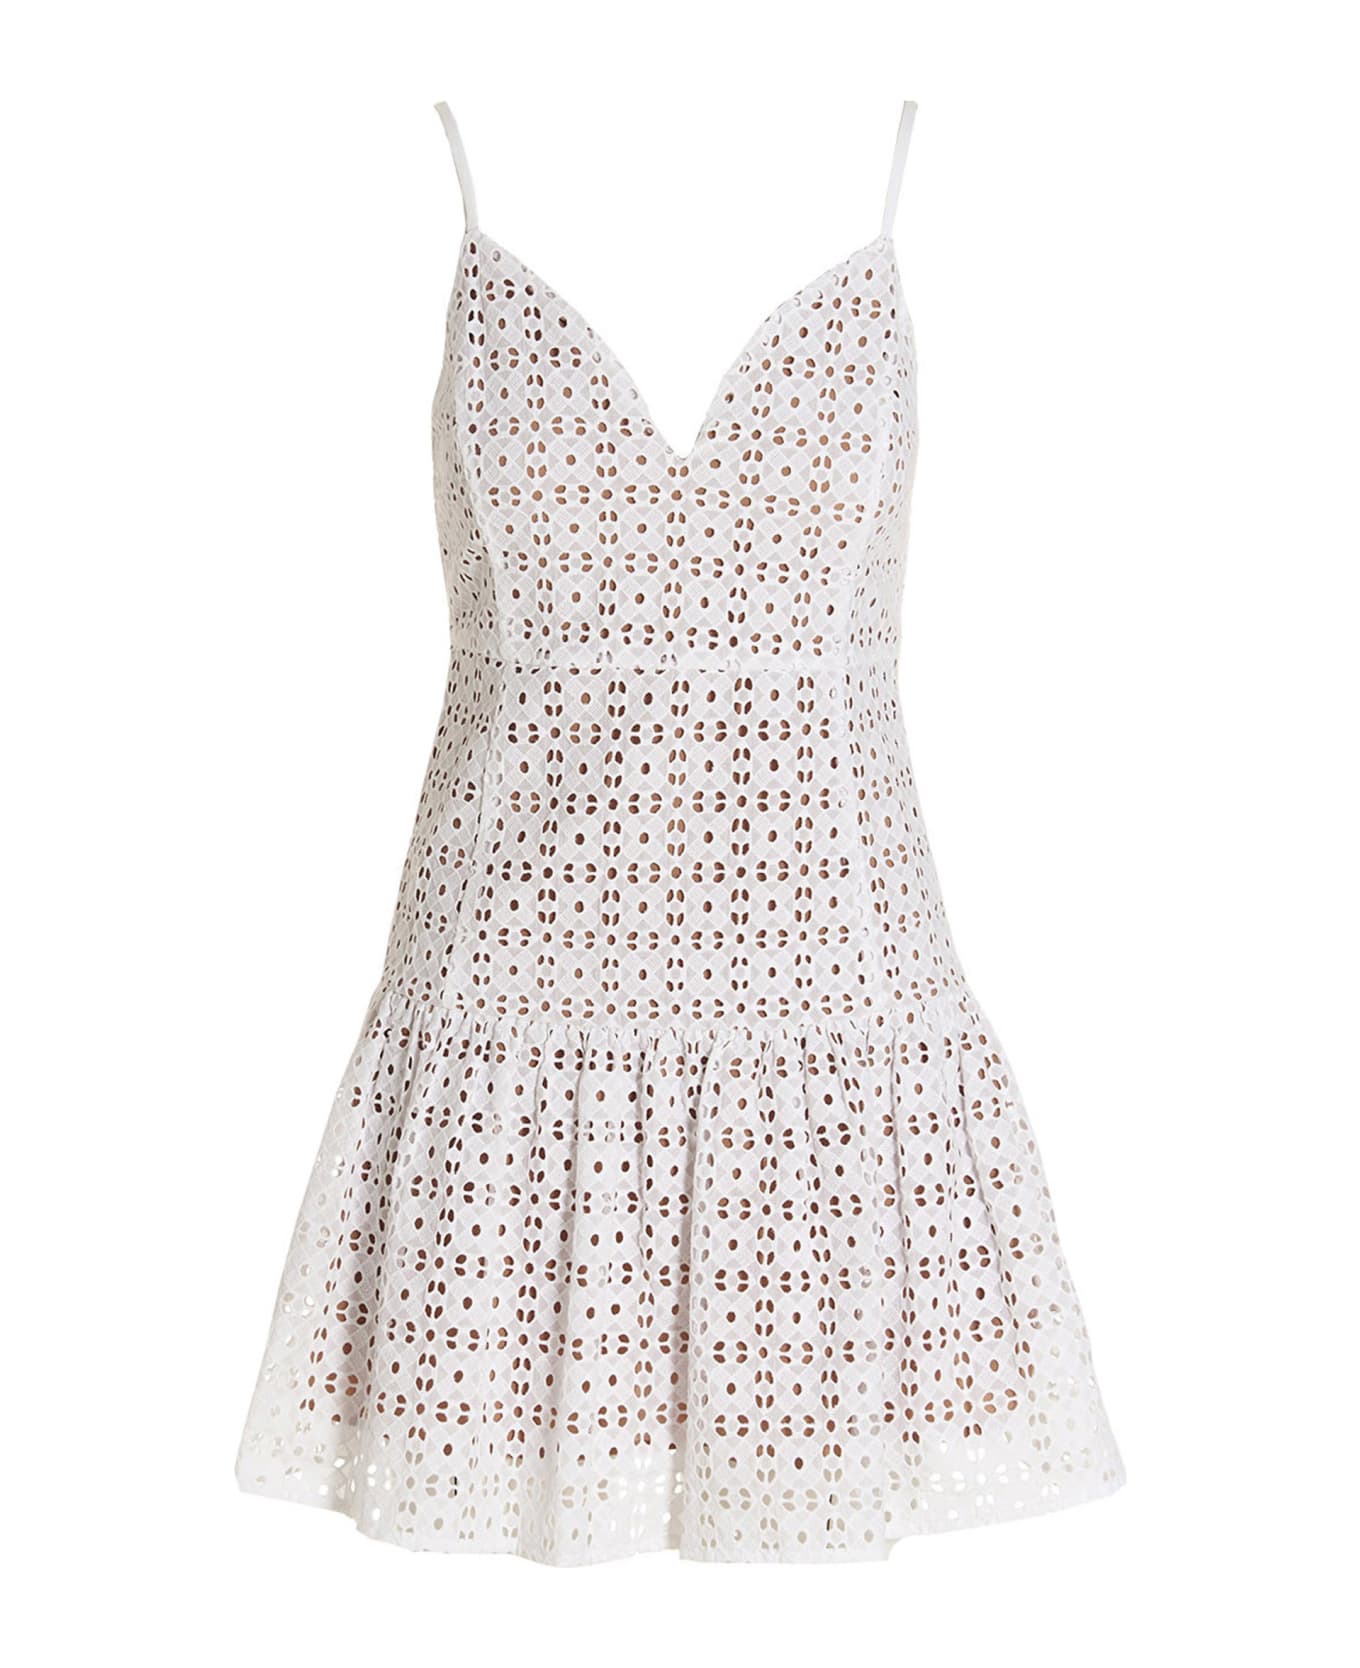 Michael Kors Collection St Gallen Dress - White